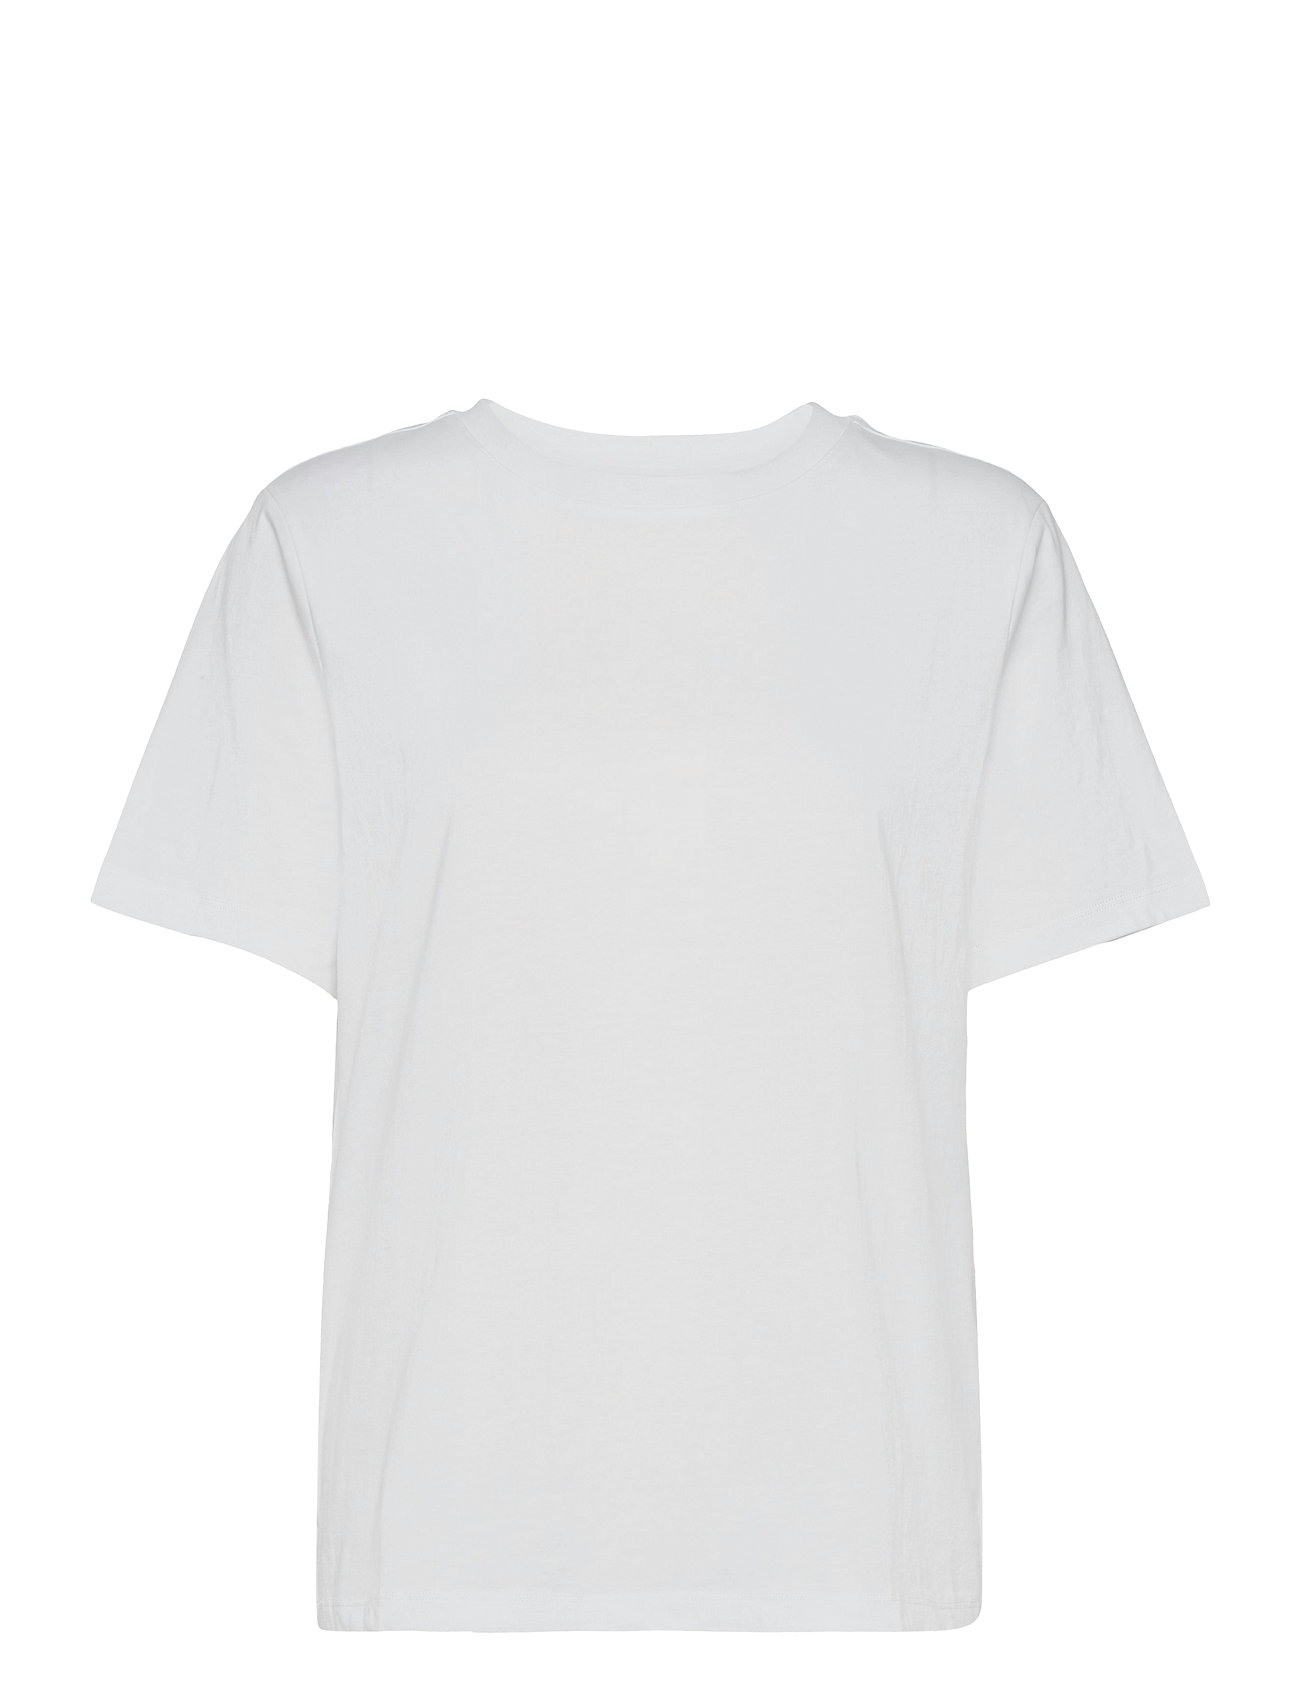 Beeja T-shirts & Tops Short-sleeved Valkoinen MbyM, mbyM